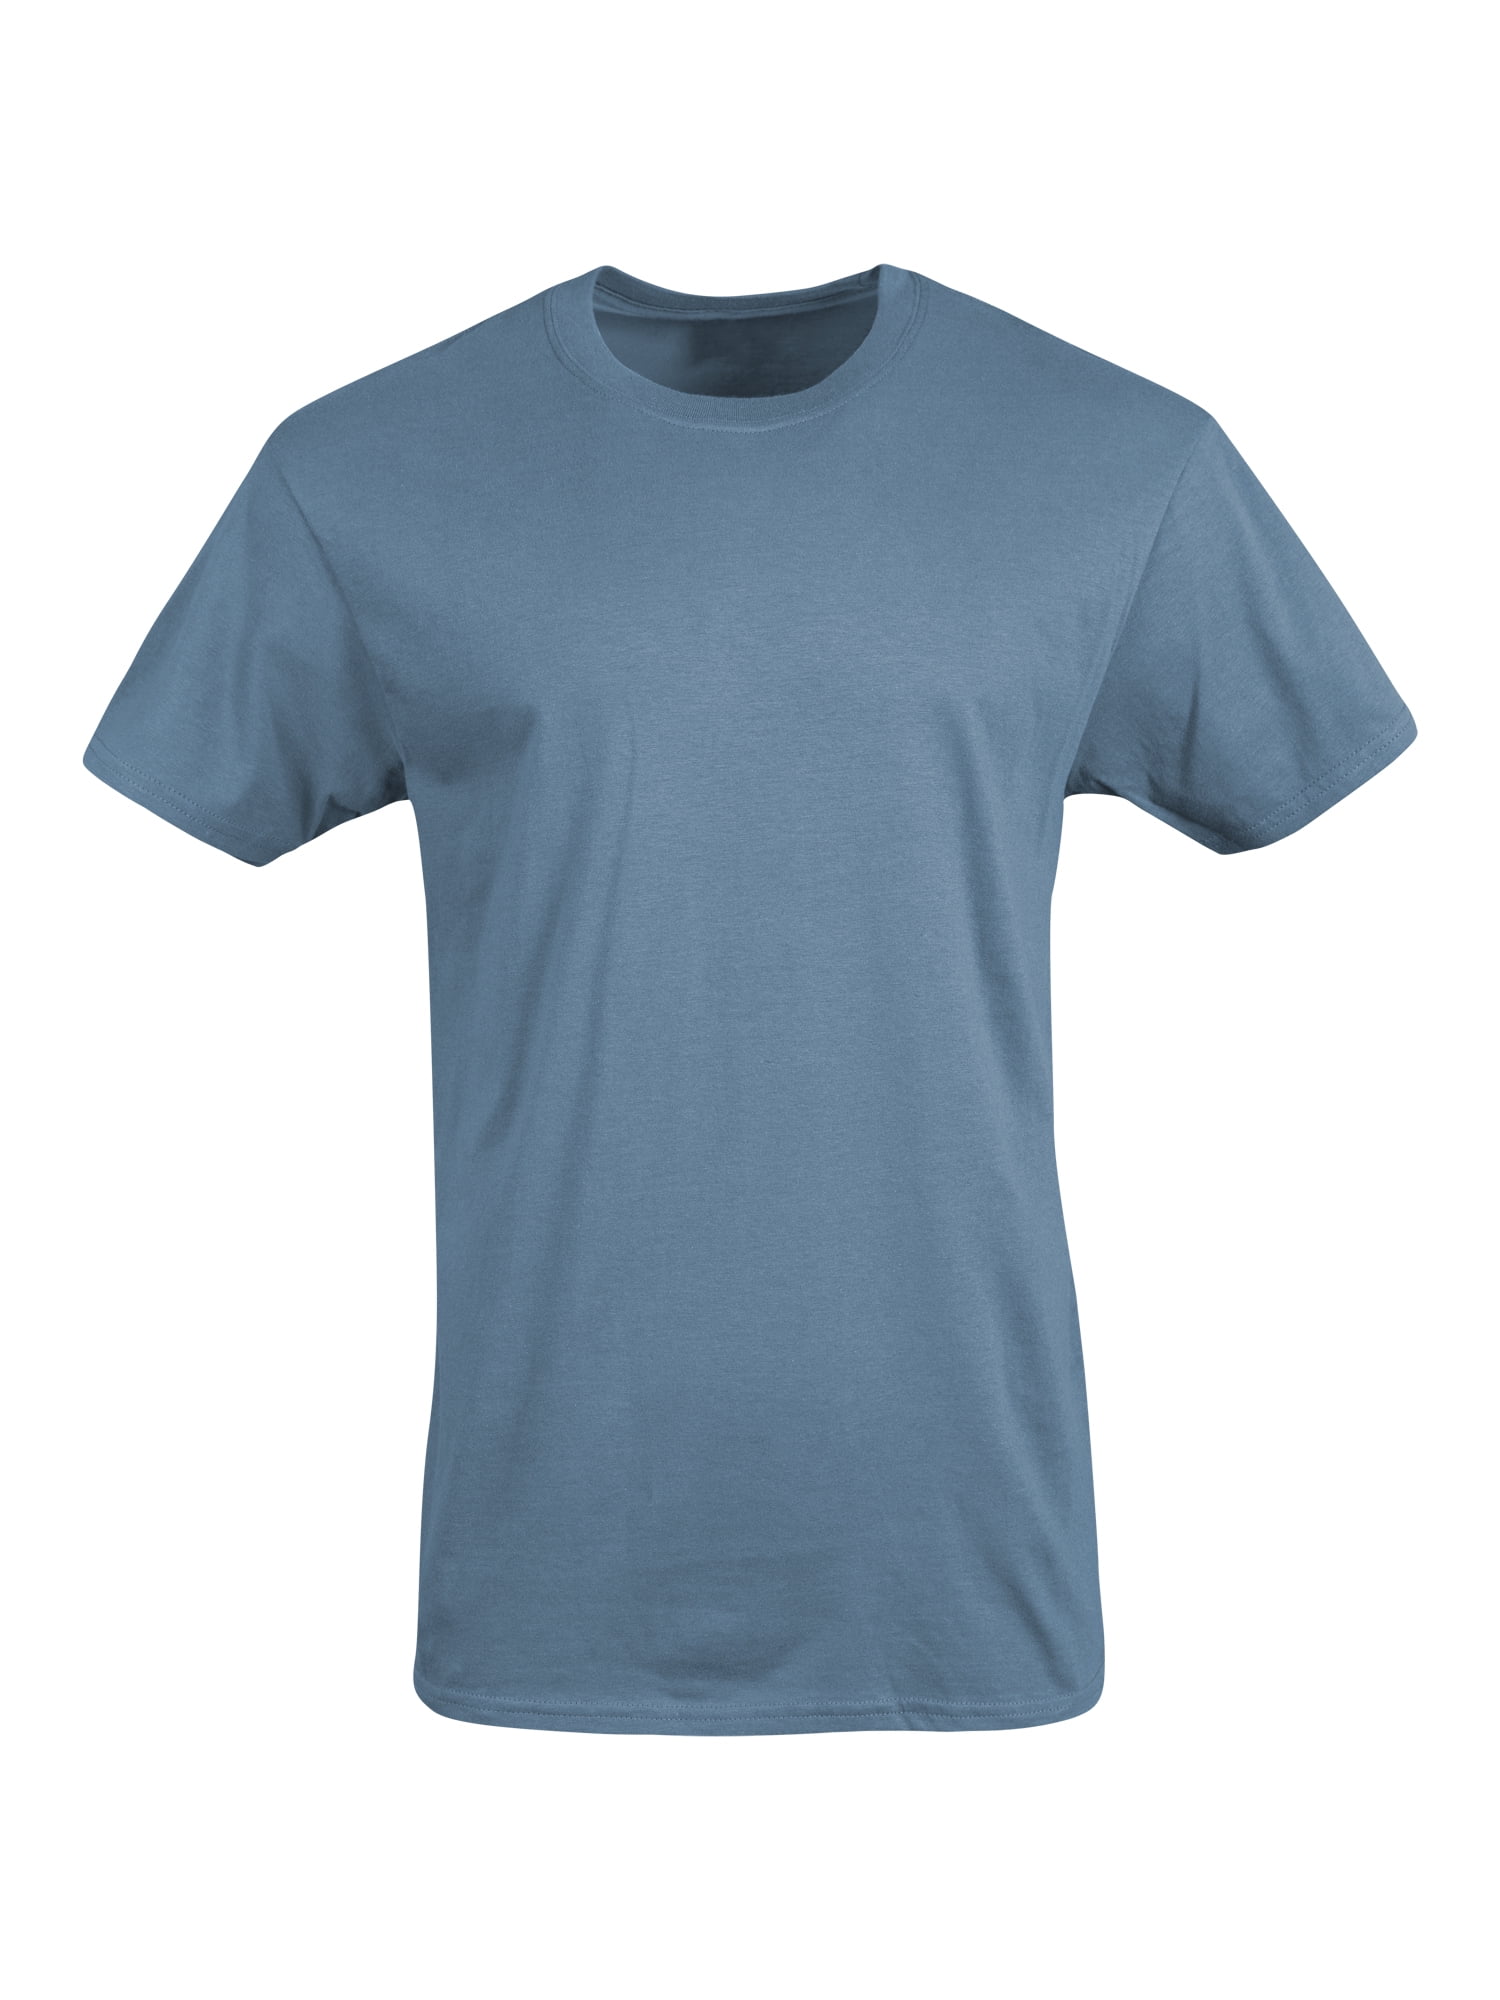 5 Pack) GILDAN Short Sleeve Mix Colors Plain T Shirts S M L XL 2XL